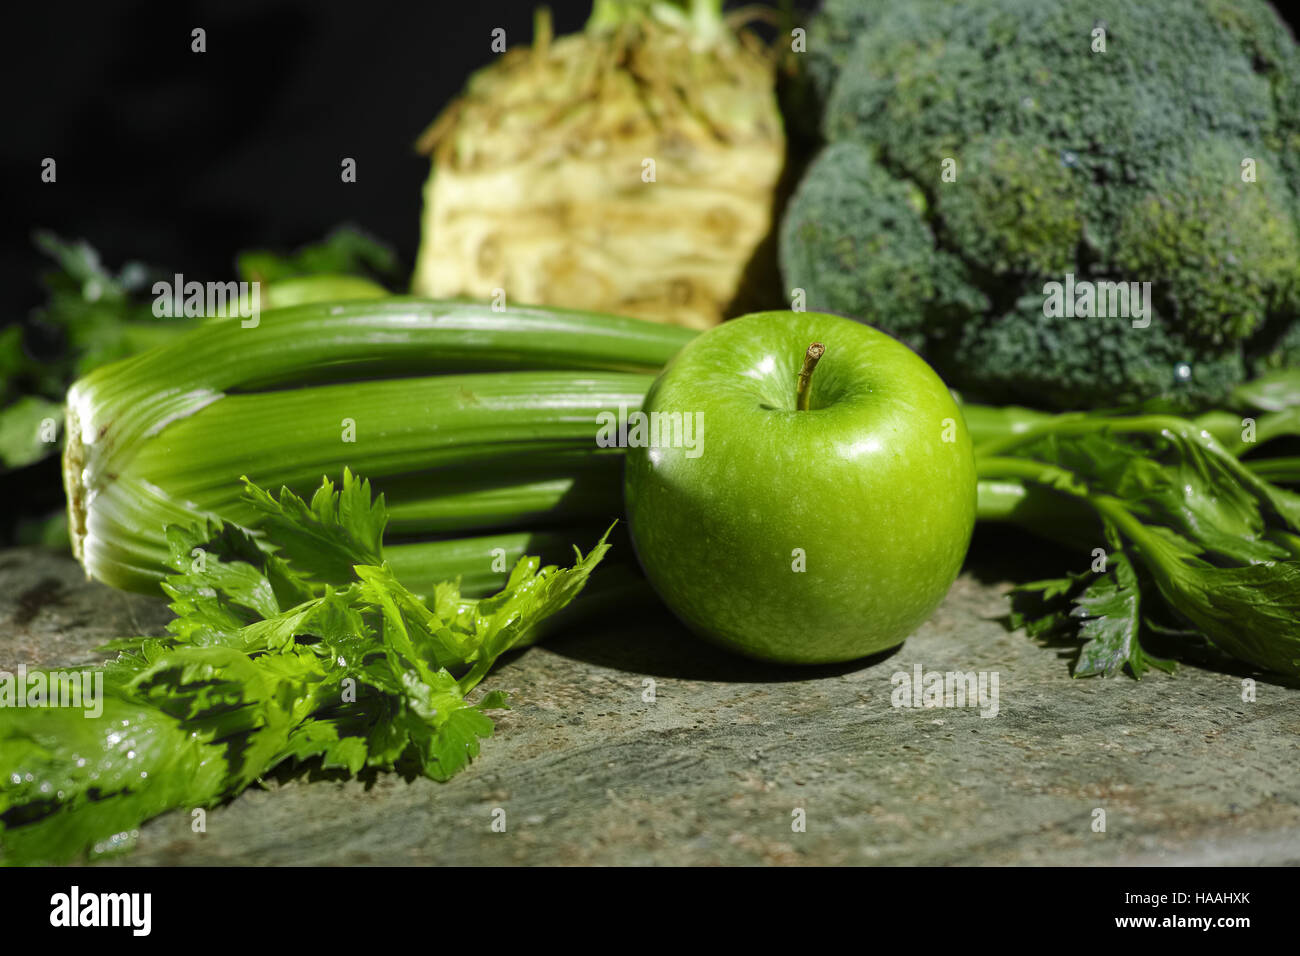 Verdure e frutta - sedano, mele, radice di sedano rapa, broccoli, dieta sana nozione Foto Stock